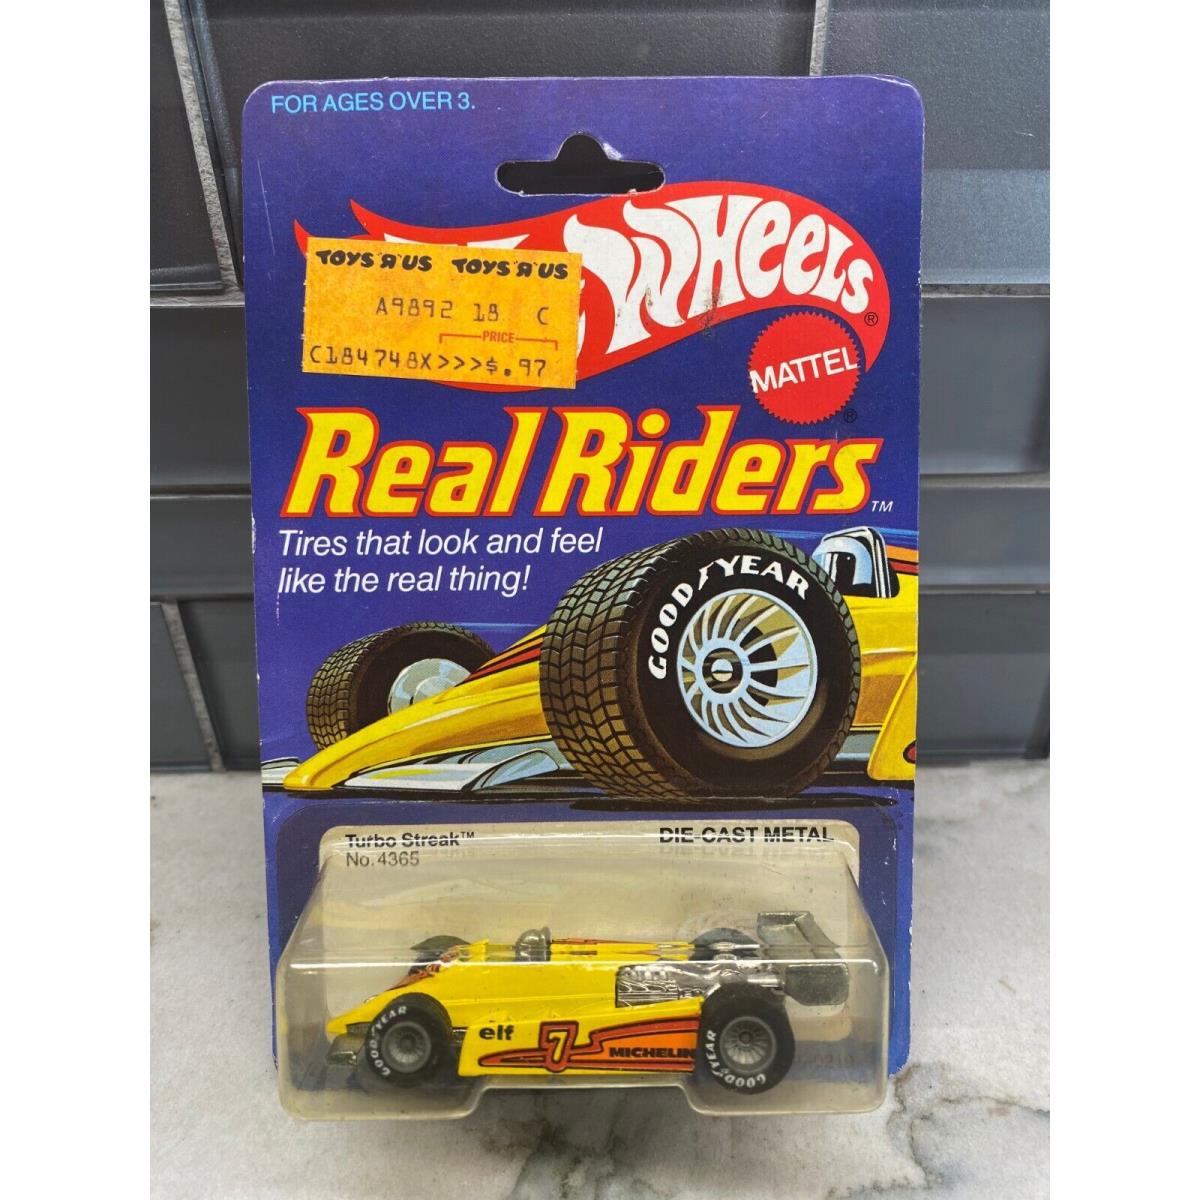 Hot Wheels 1982 Vintage Real Riders Turbo Streak - Yellow W/good Year Tires